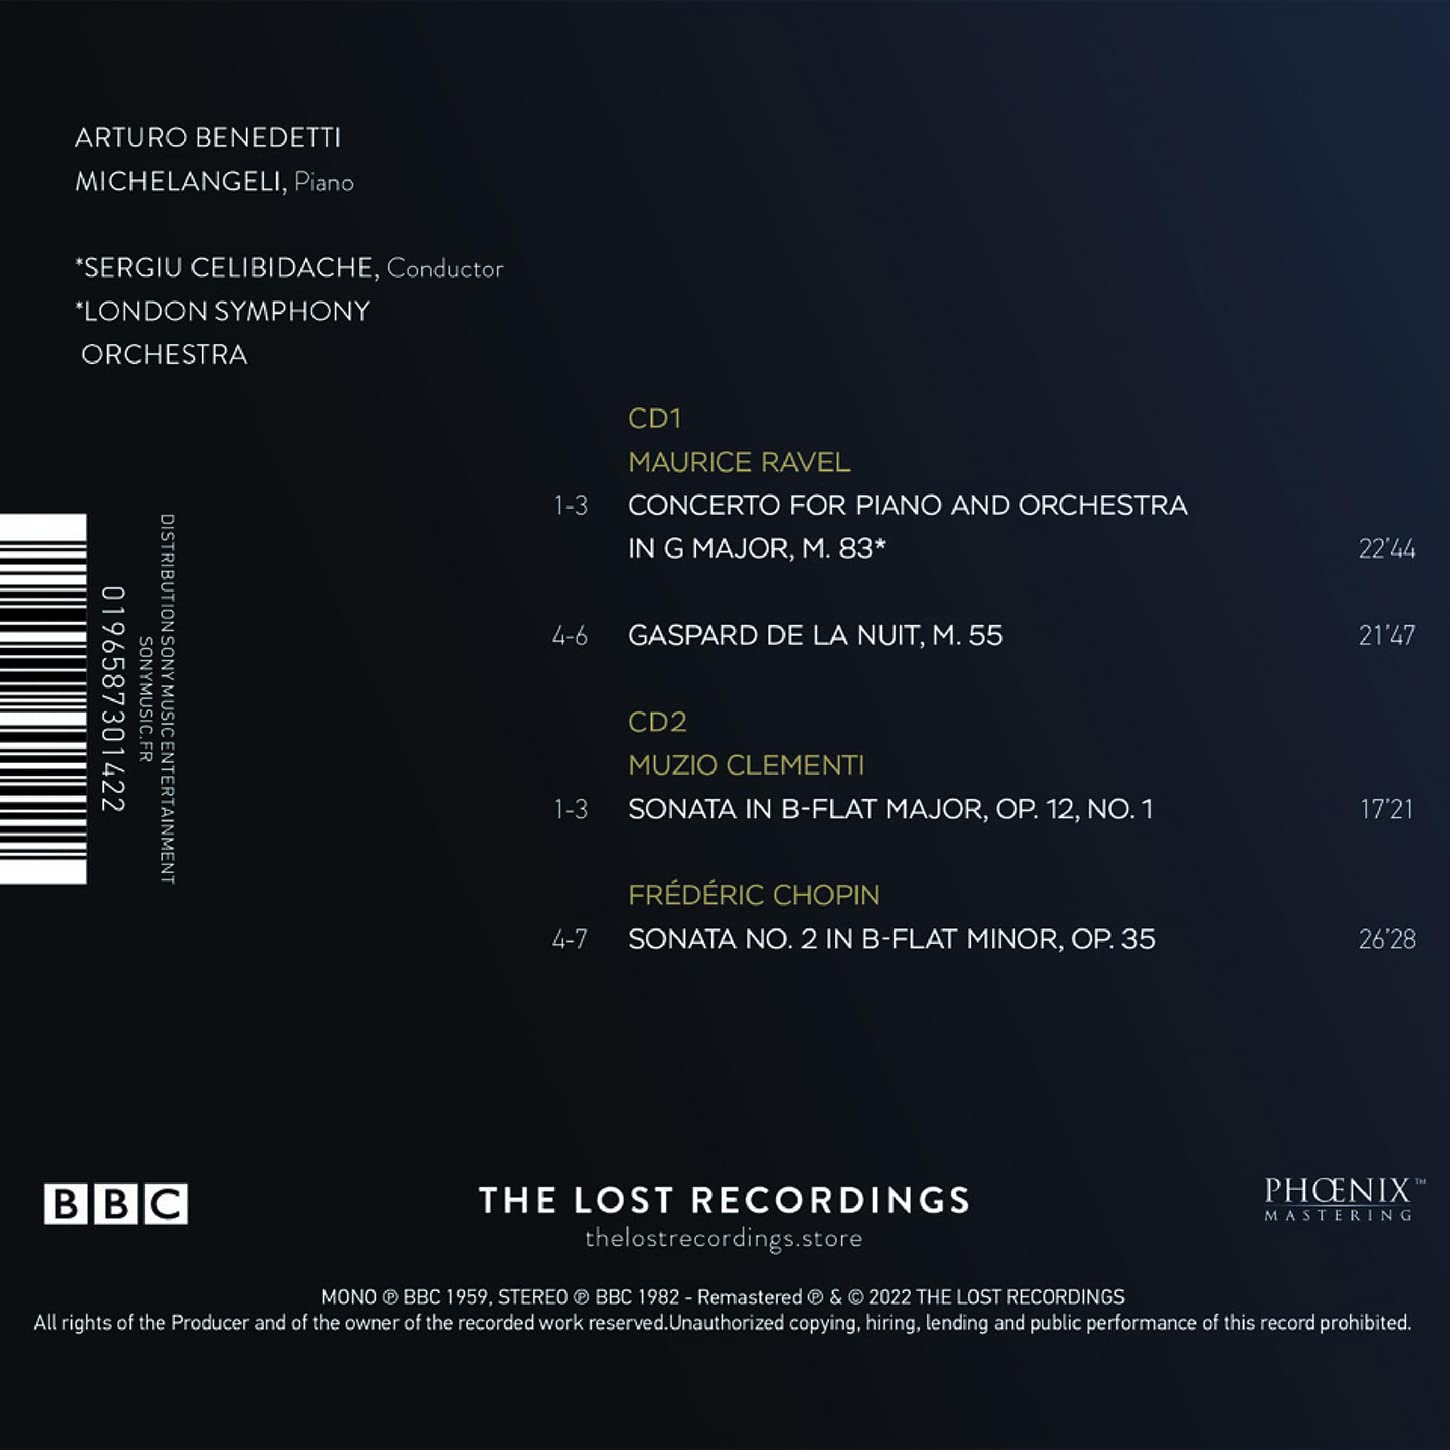 Arturo Benedetti Michelangeli 아르투로 베네데티 미켈란젤리 런던 레코딩 1집 (The London Recordings Vol. 1)